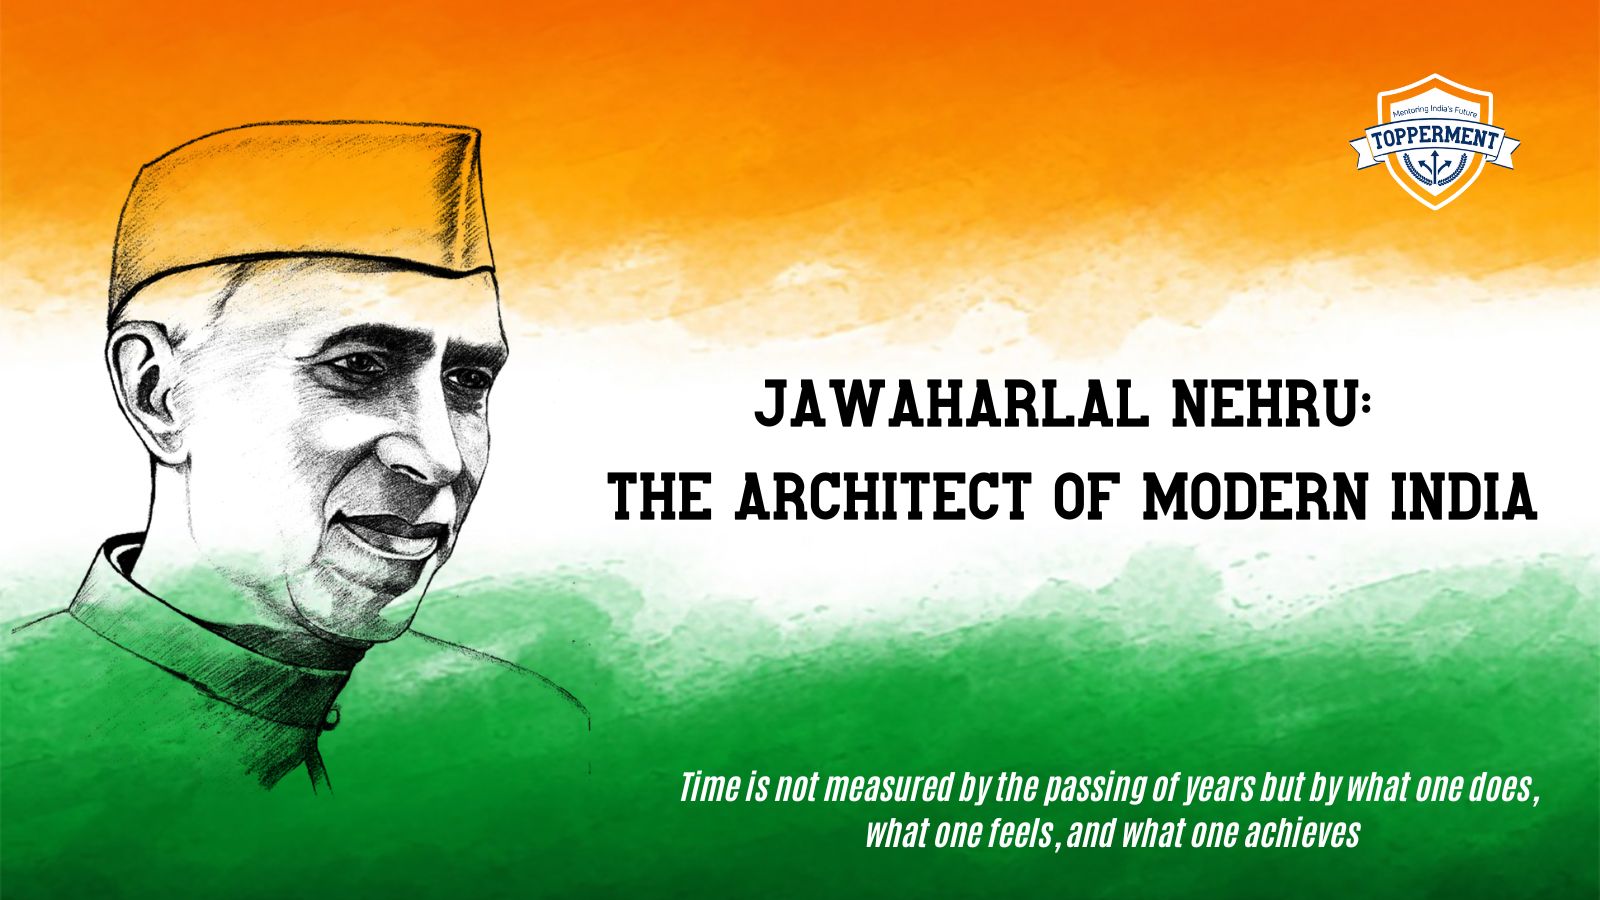 Jawaharlal-Nehru-The-Architect-of-Modern-India.